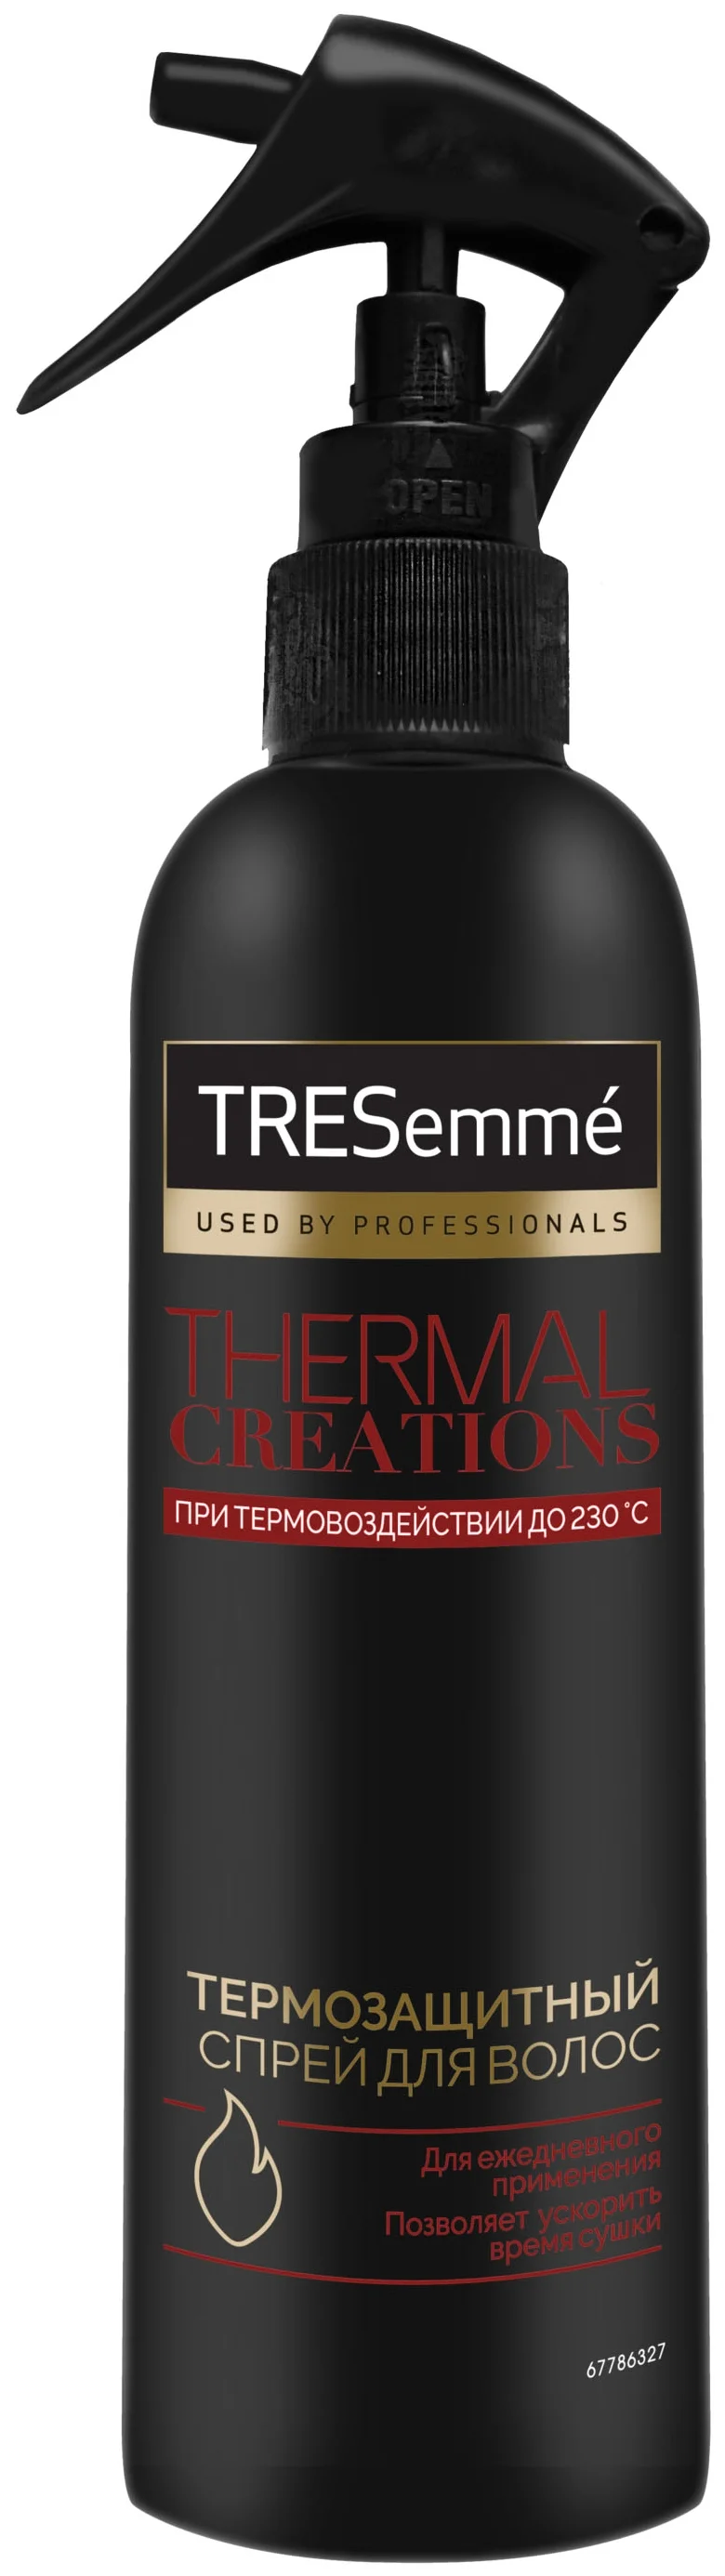 TRESemme Thermal Creations - эффект: придание блеска